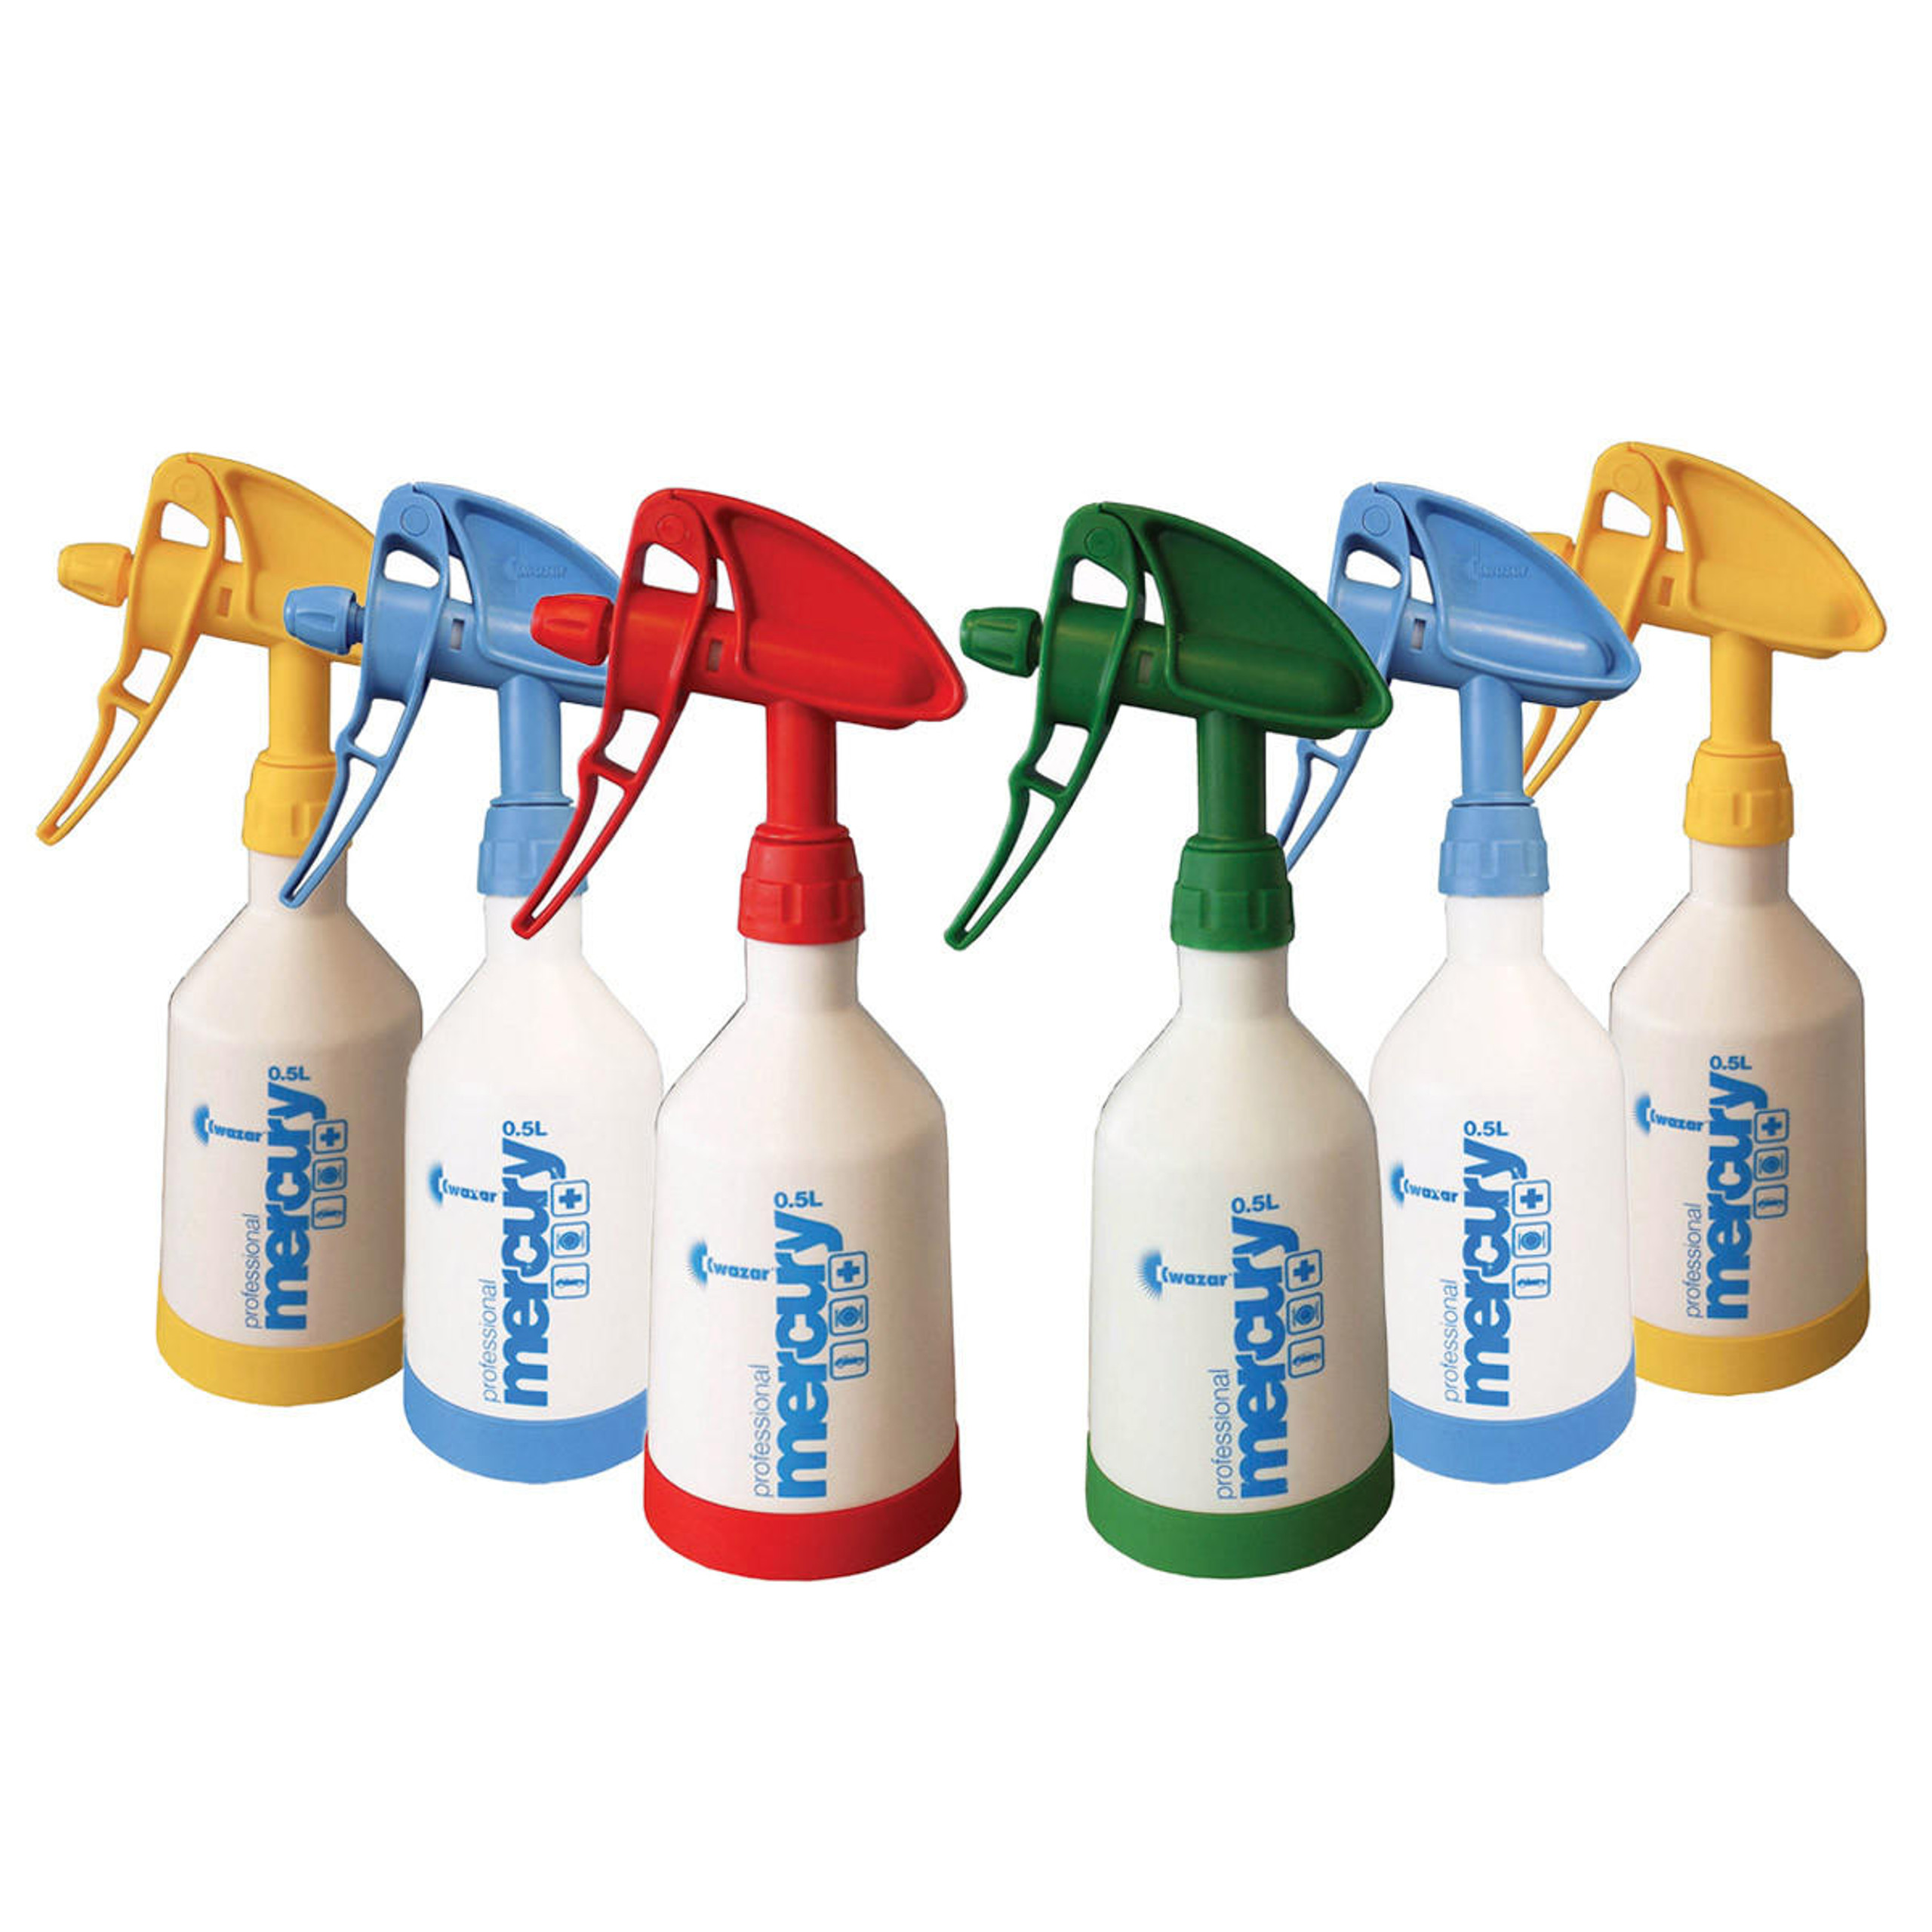  Mercury Pro Liter Spray Bottle 17 oz. - 6 Pack